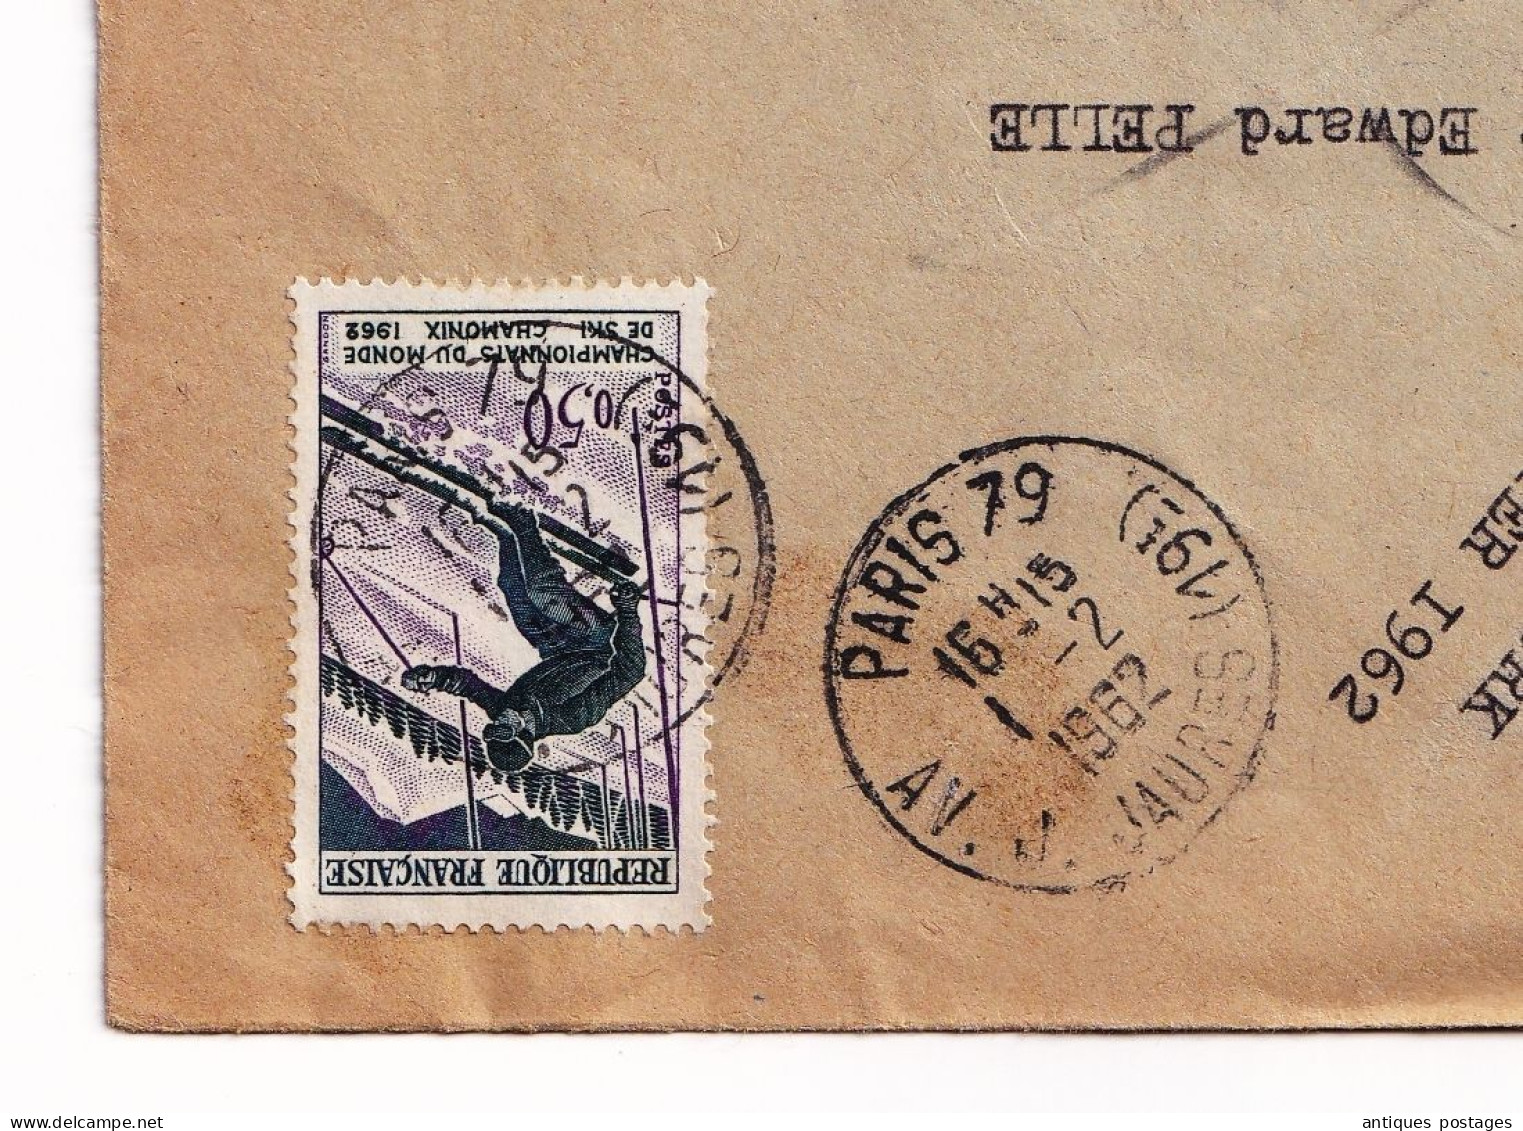 Lettre 3 Février 1962 Paris Voyage Inaugural Paquebot France Le Havre New York U.S.A. - Briefe U. Dokumente